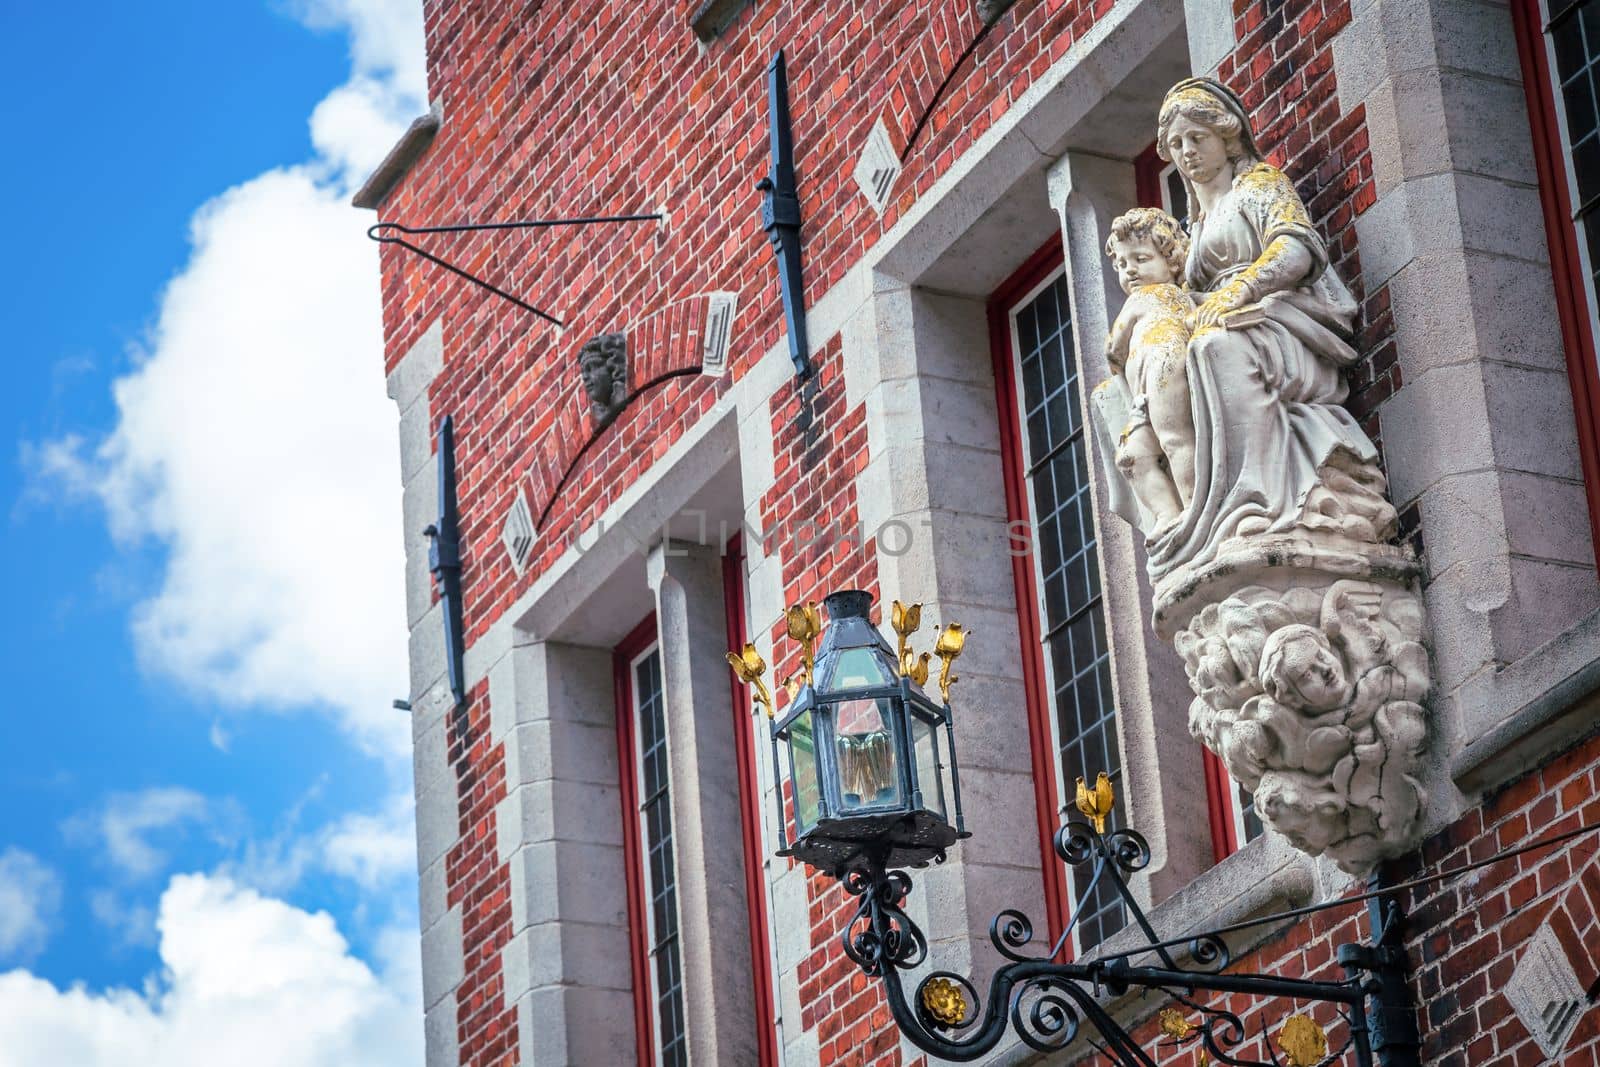 Flemish and ornate architecture of Bruges city, Flanders, Belgium